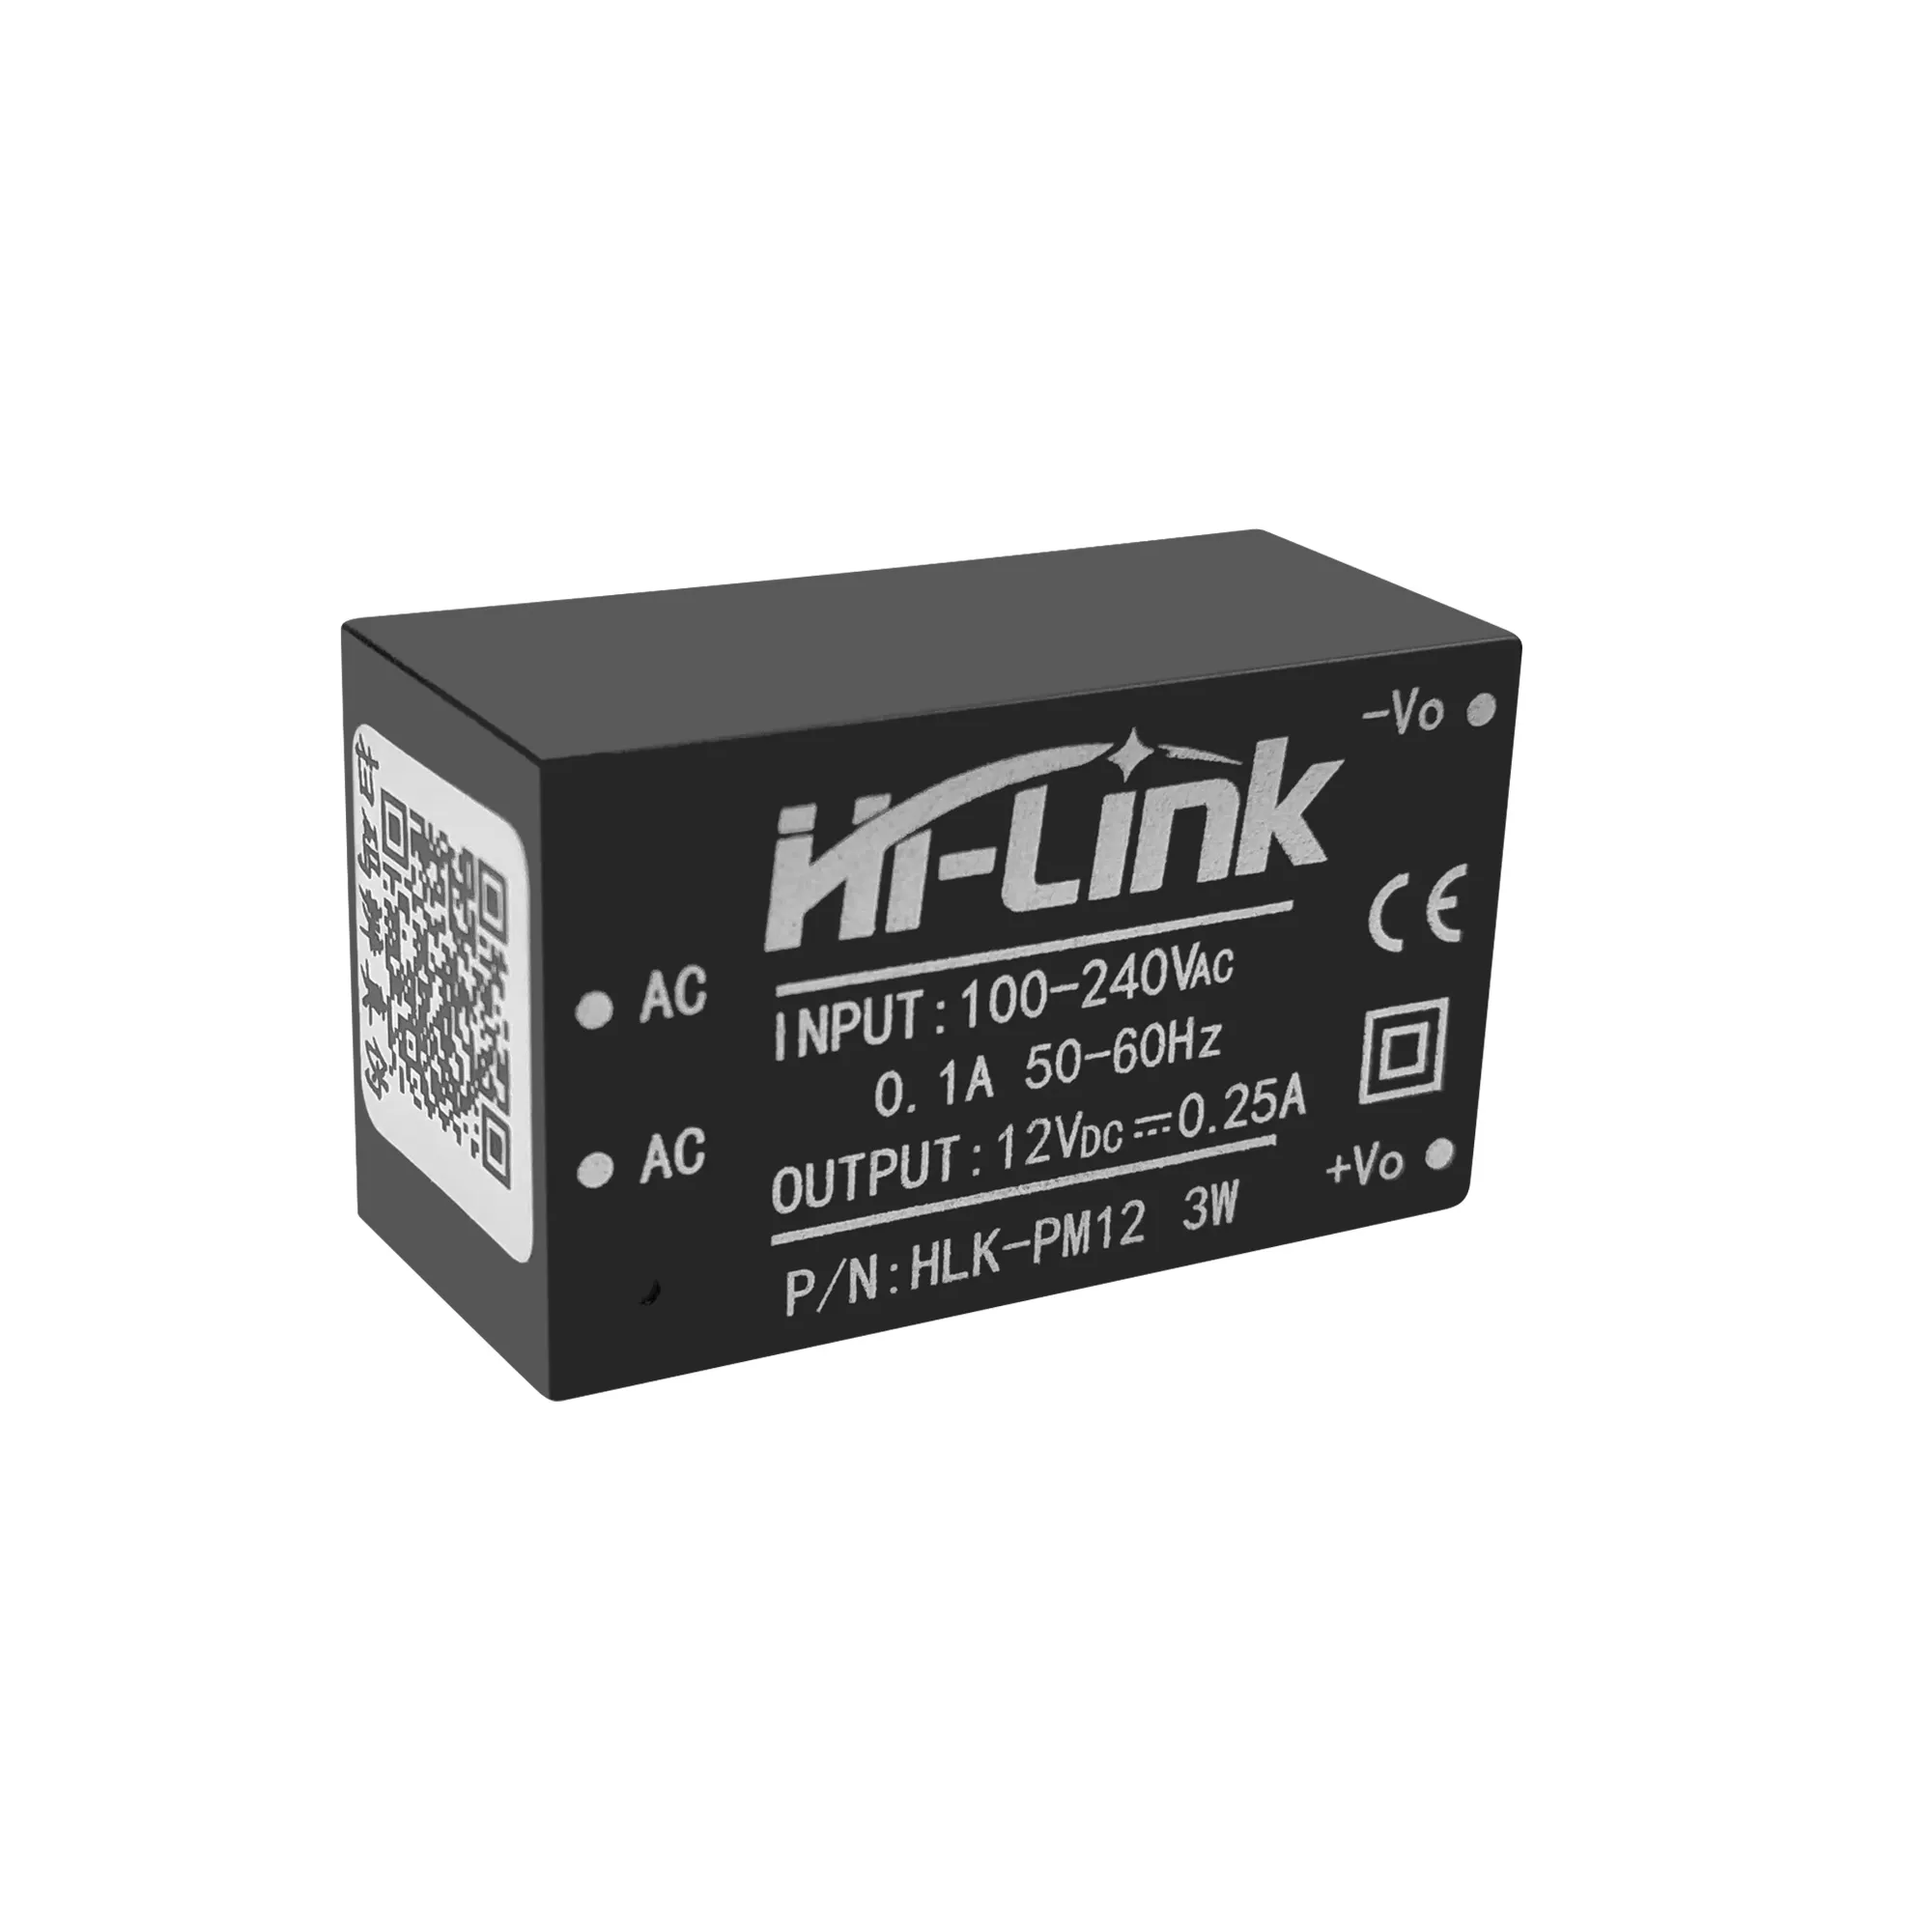 Hi-Link-módulo de alimentación original, CA de 220V a 3W, 12V, 0.25A, CC, con certificado CE RoHs, HLK-PM12